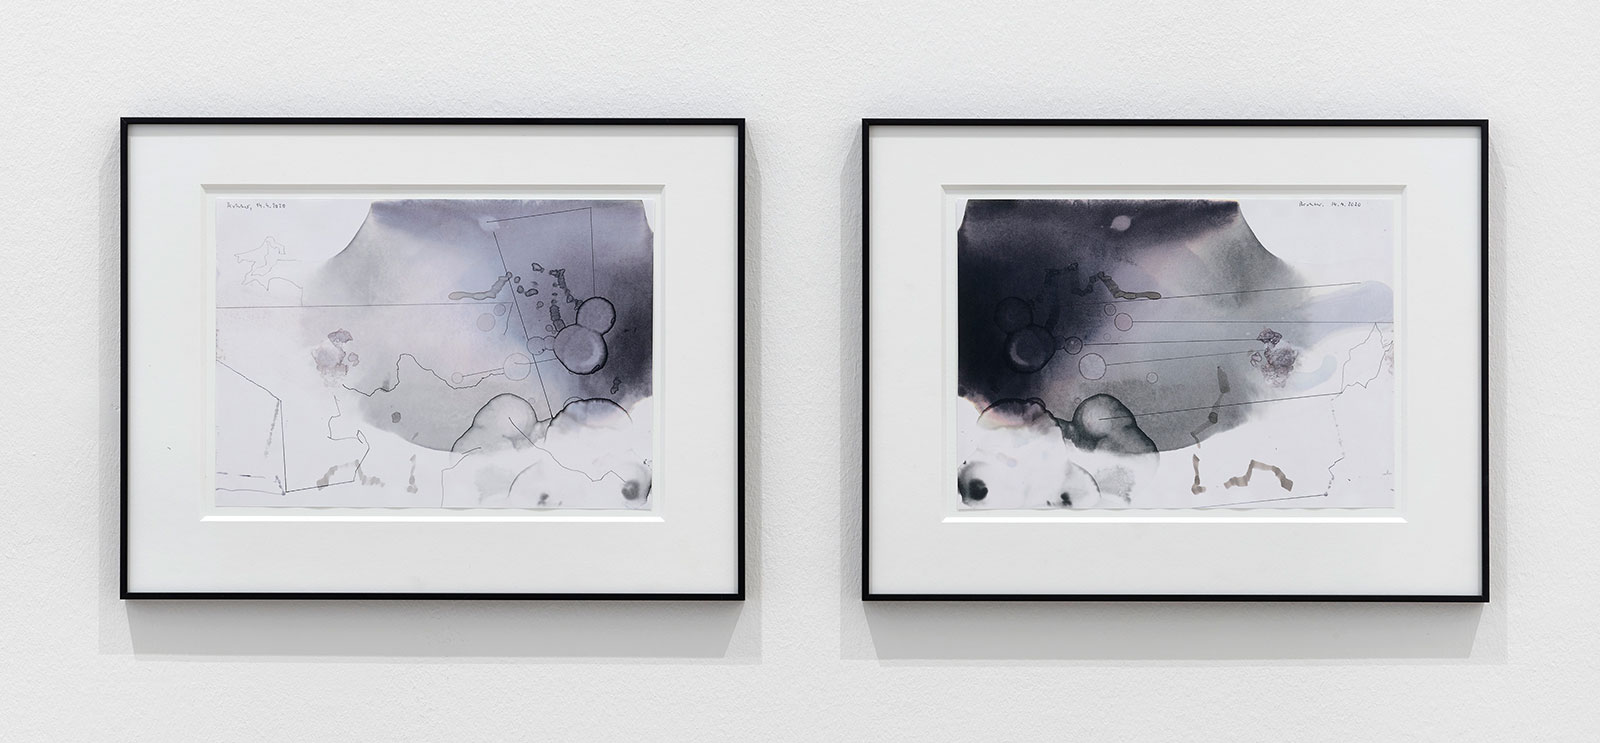 Reflections on Painting: Gerhard Richter's Birkenau Series